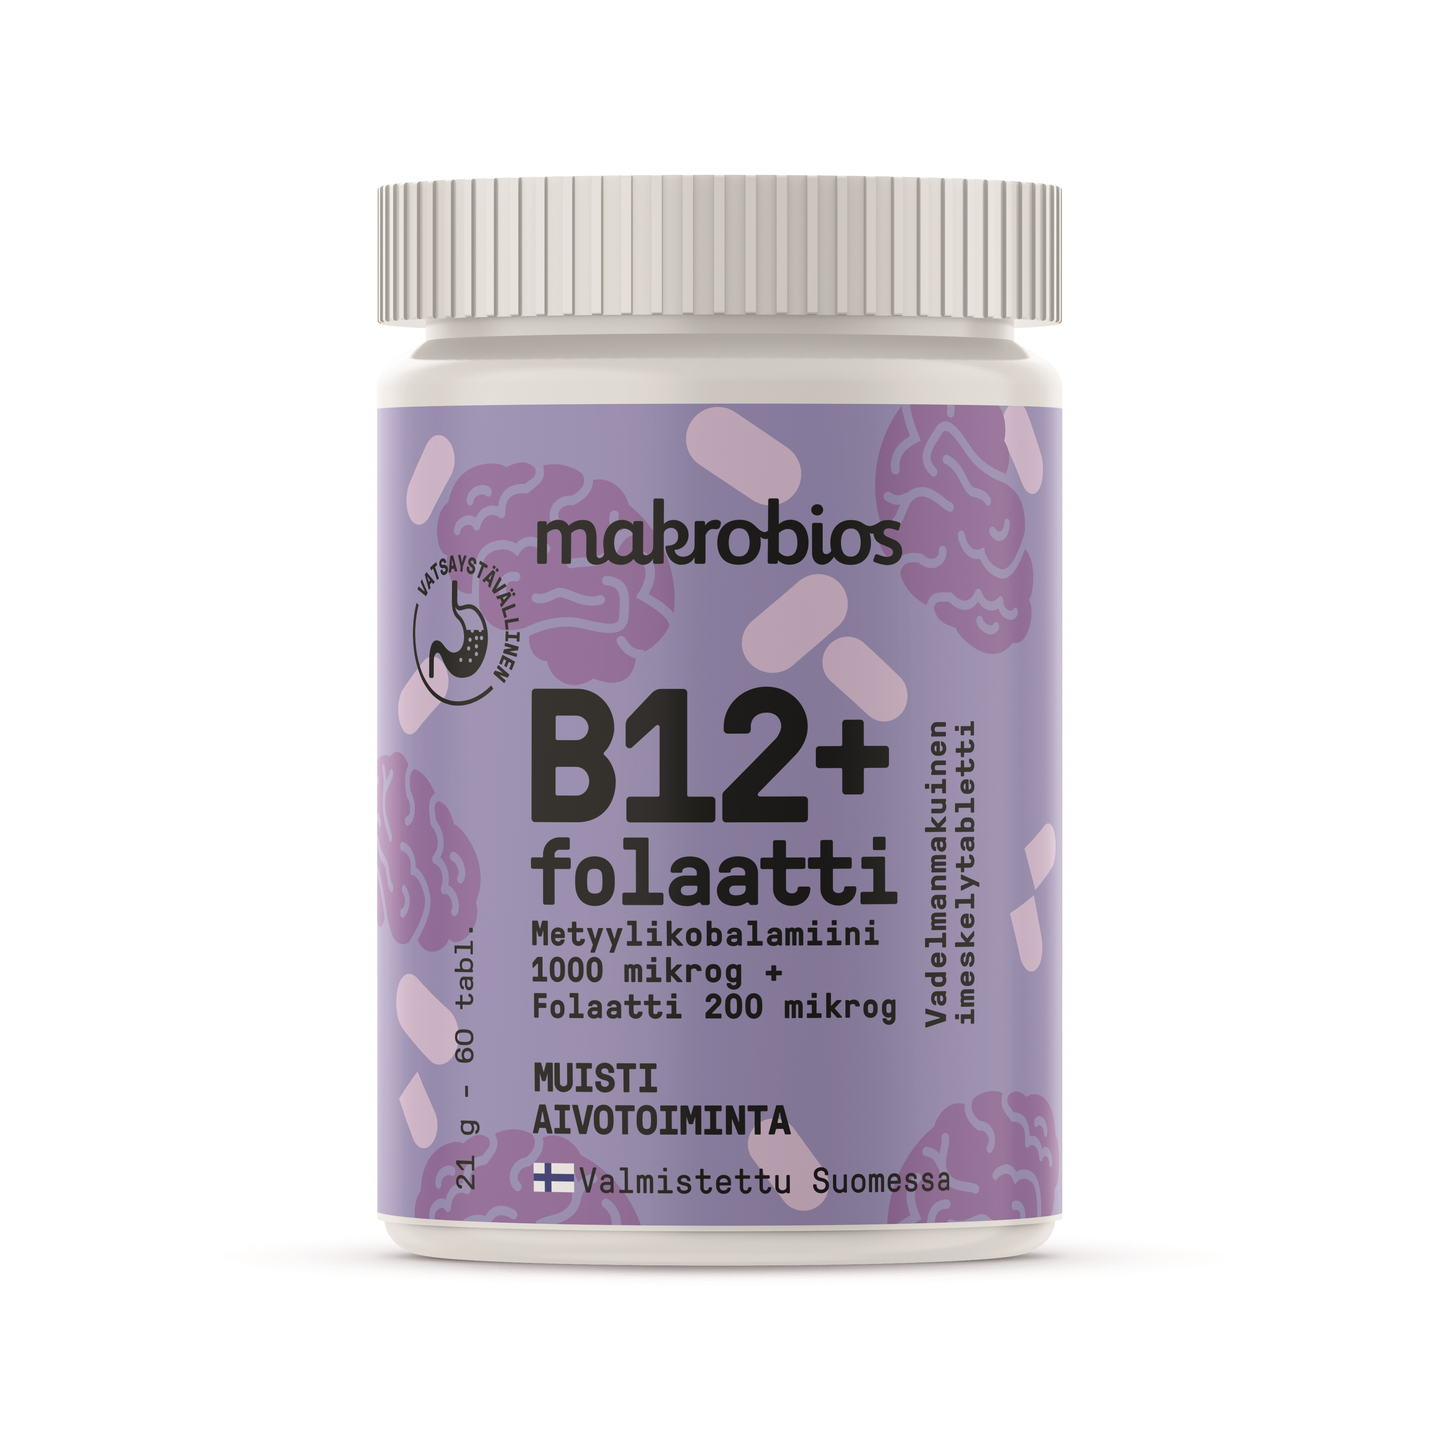 Витамины Macrobios B12 фолиевая кислота, 60 таблеток витамины для волос в7 витамин с е кокосовое масло цинк фолиевая кислота инозитол sugarbearhair 60 таблеток